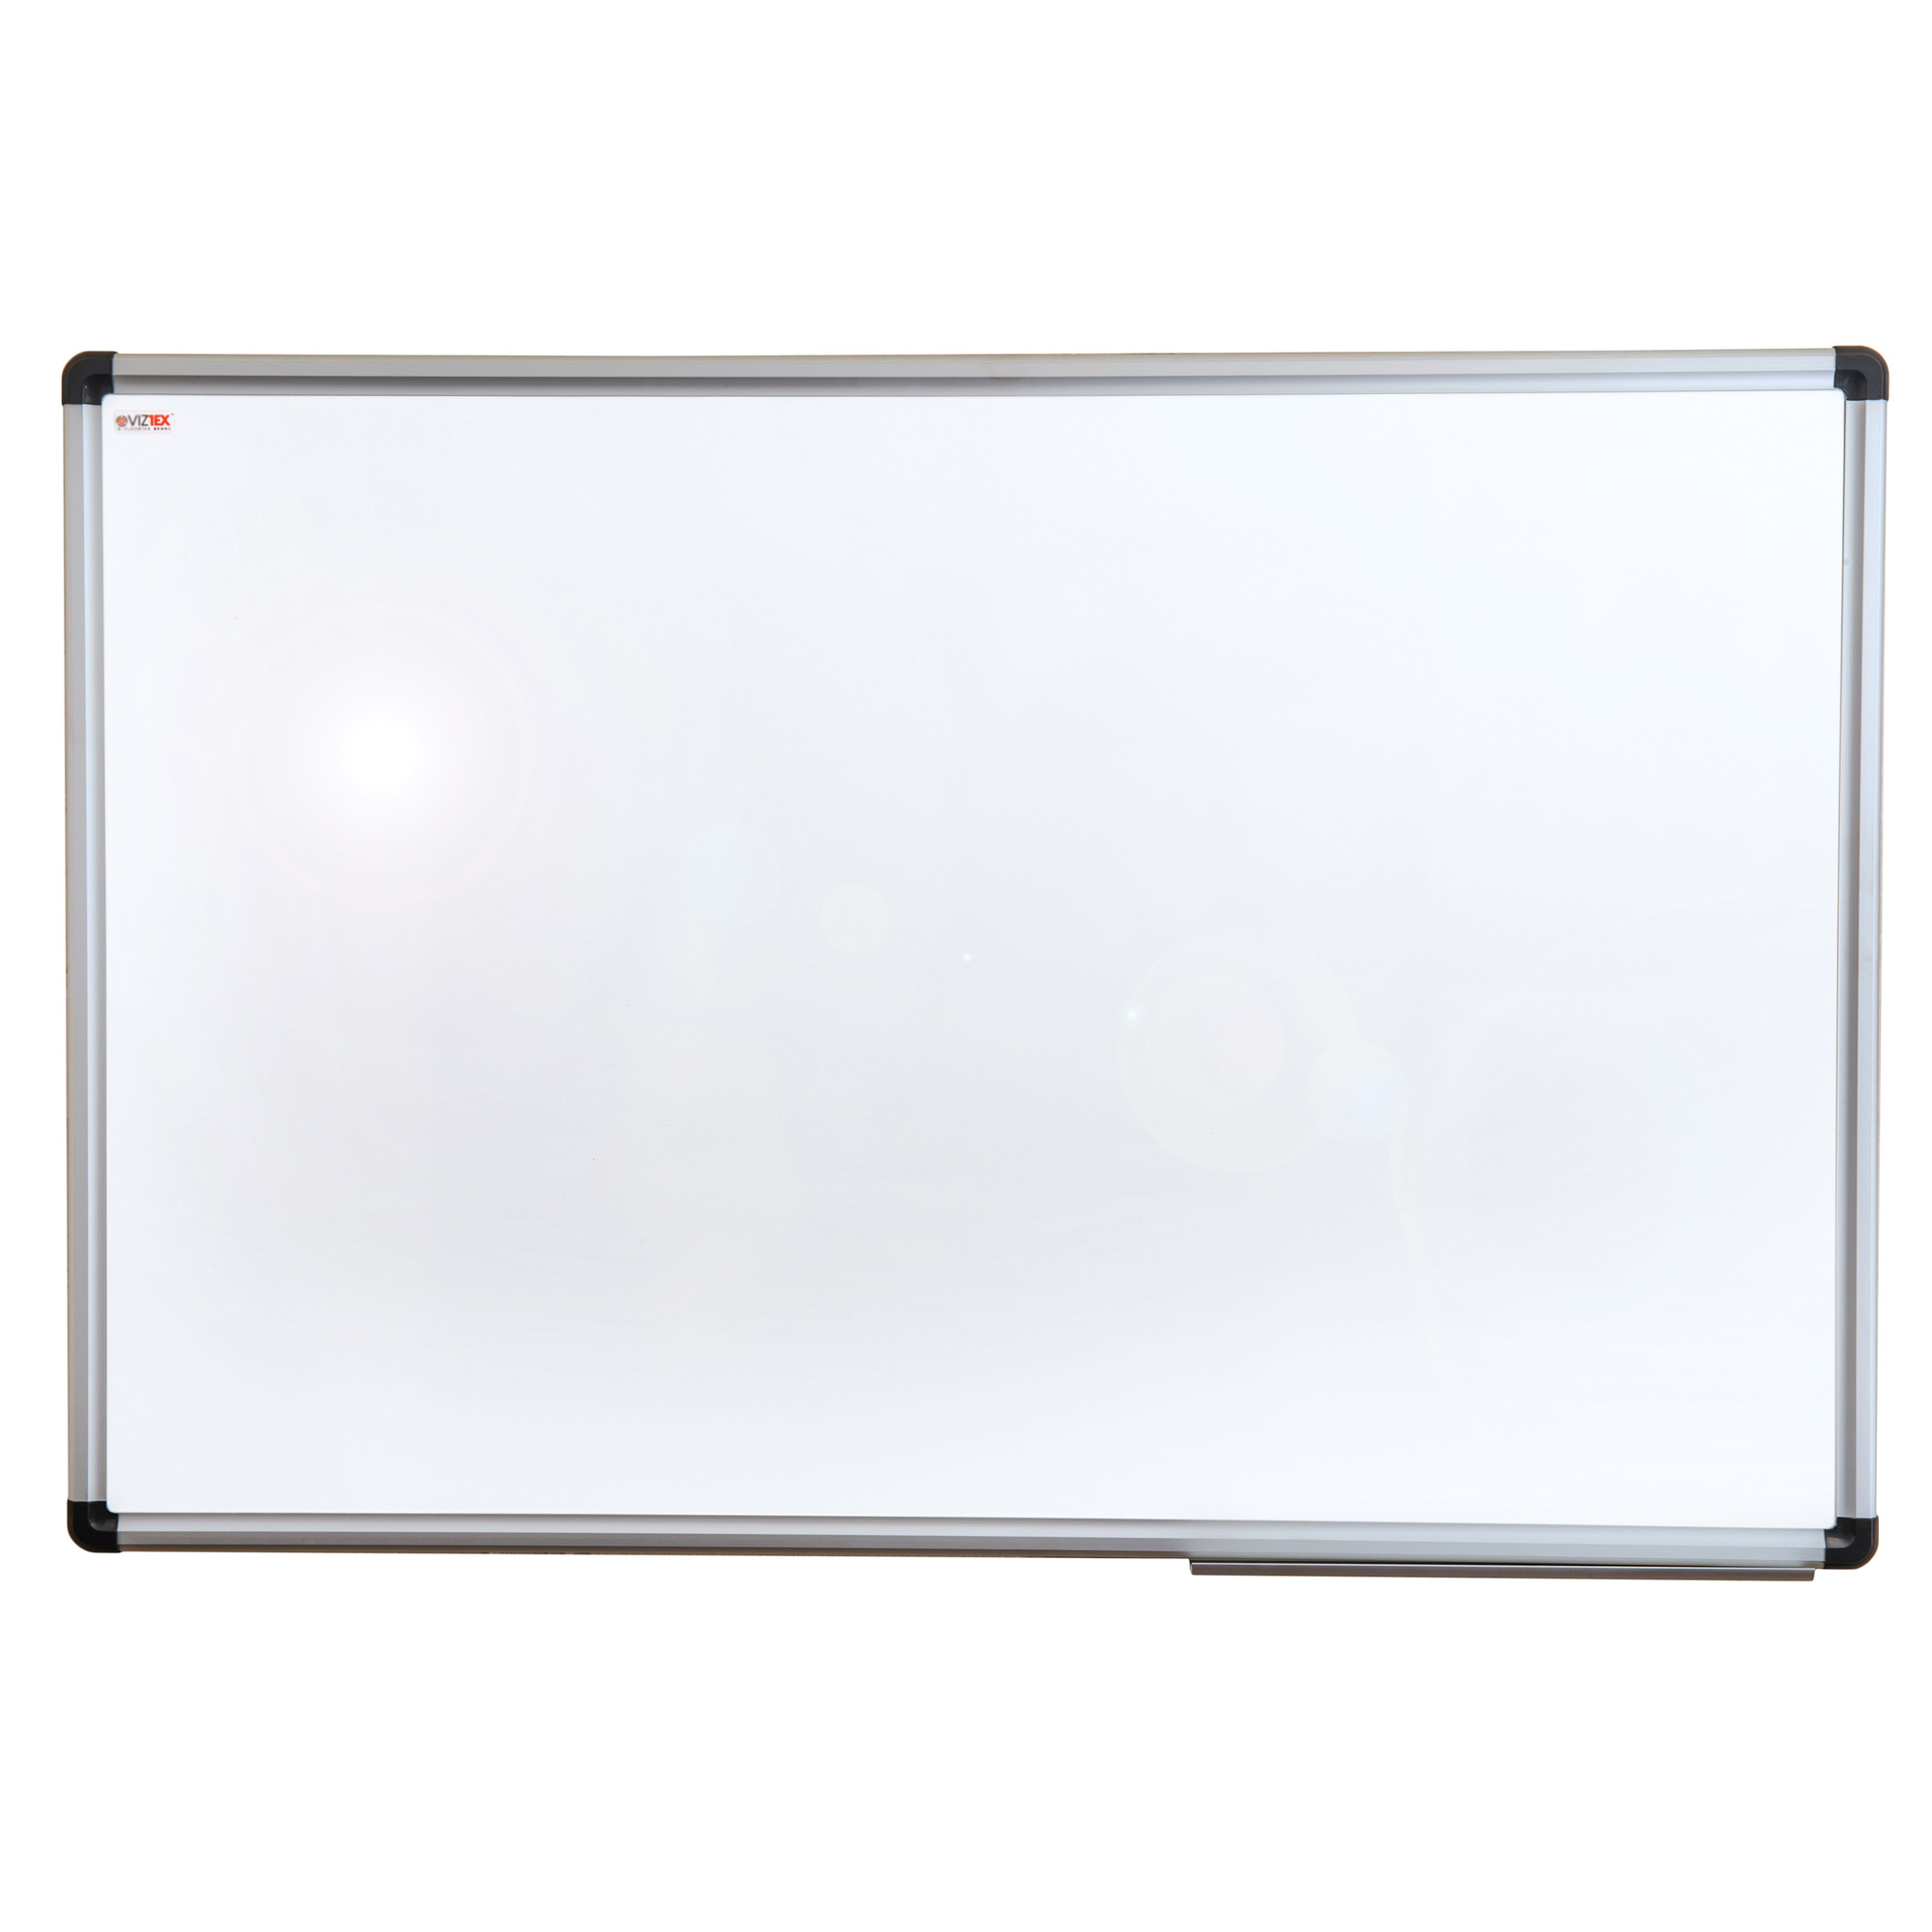 FLOORTEX Viztex , Lacq Steel Dry Erase Board;Aluminium Frame 36Inchx48Inch, Color Finish White, Model FCVLM4836A